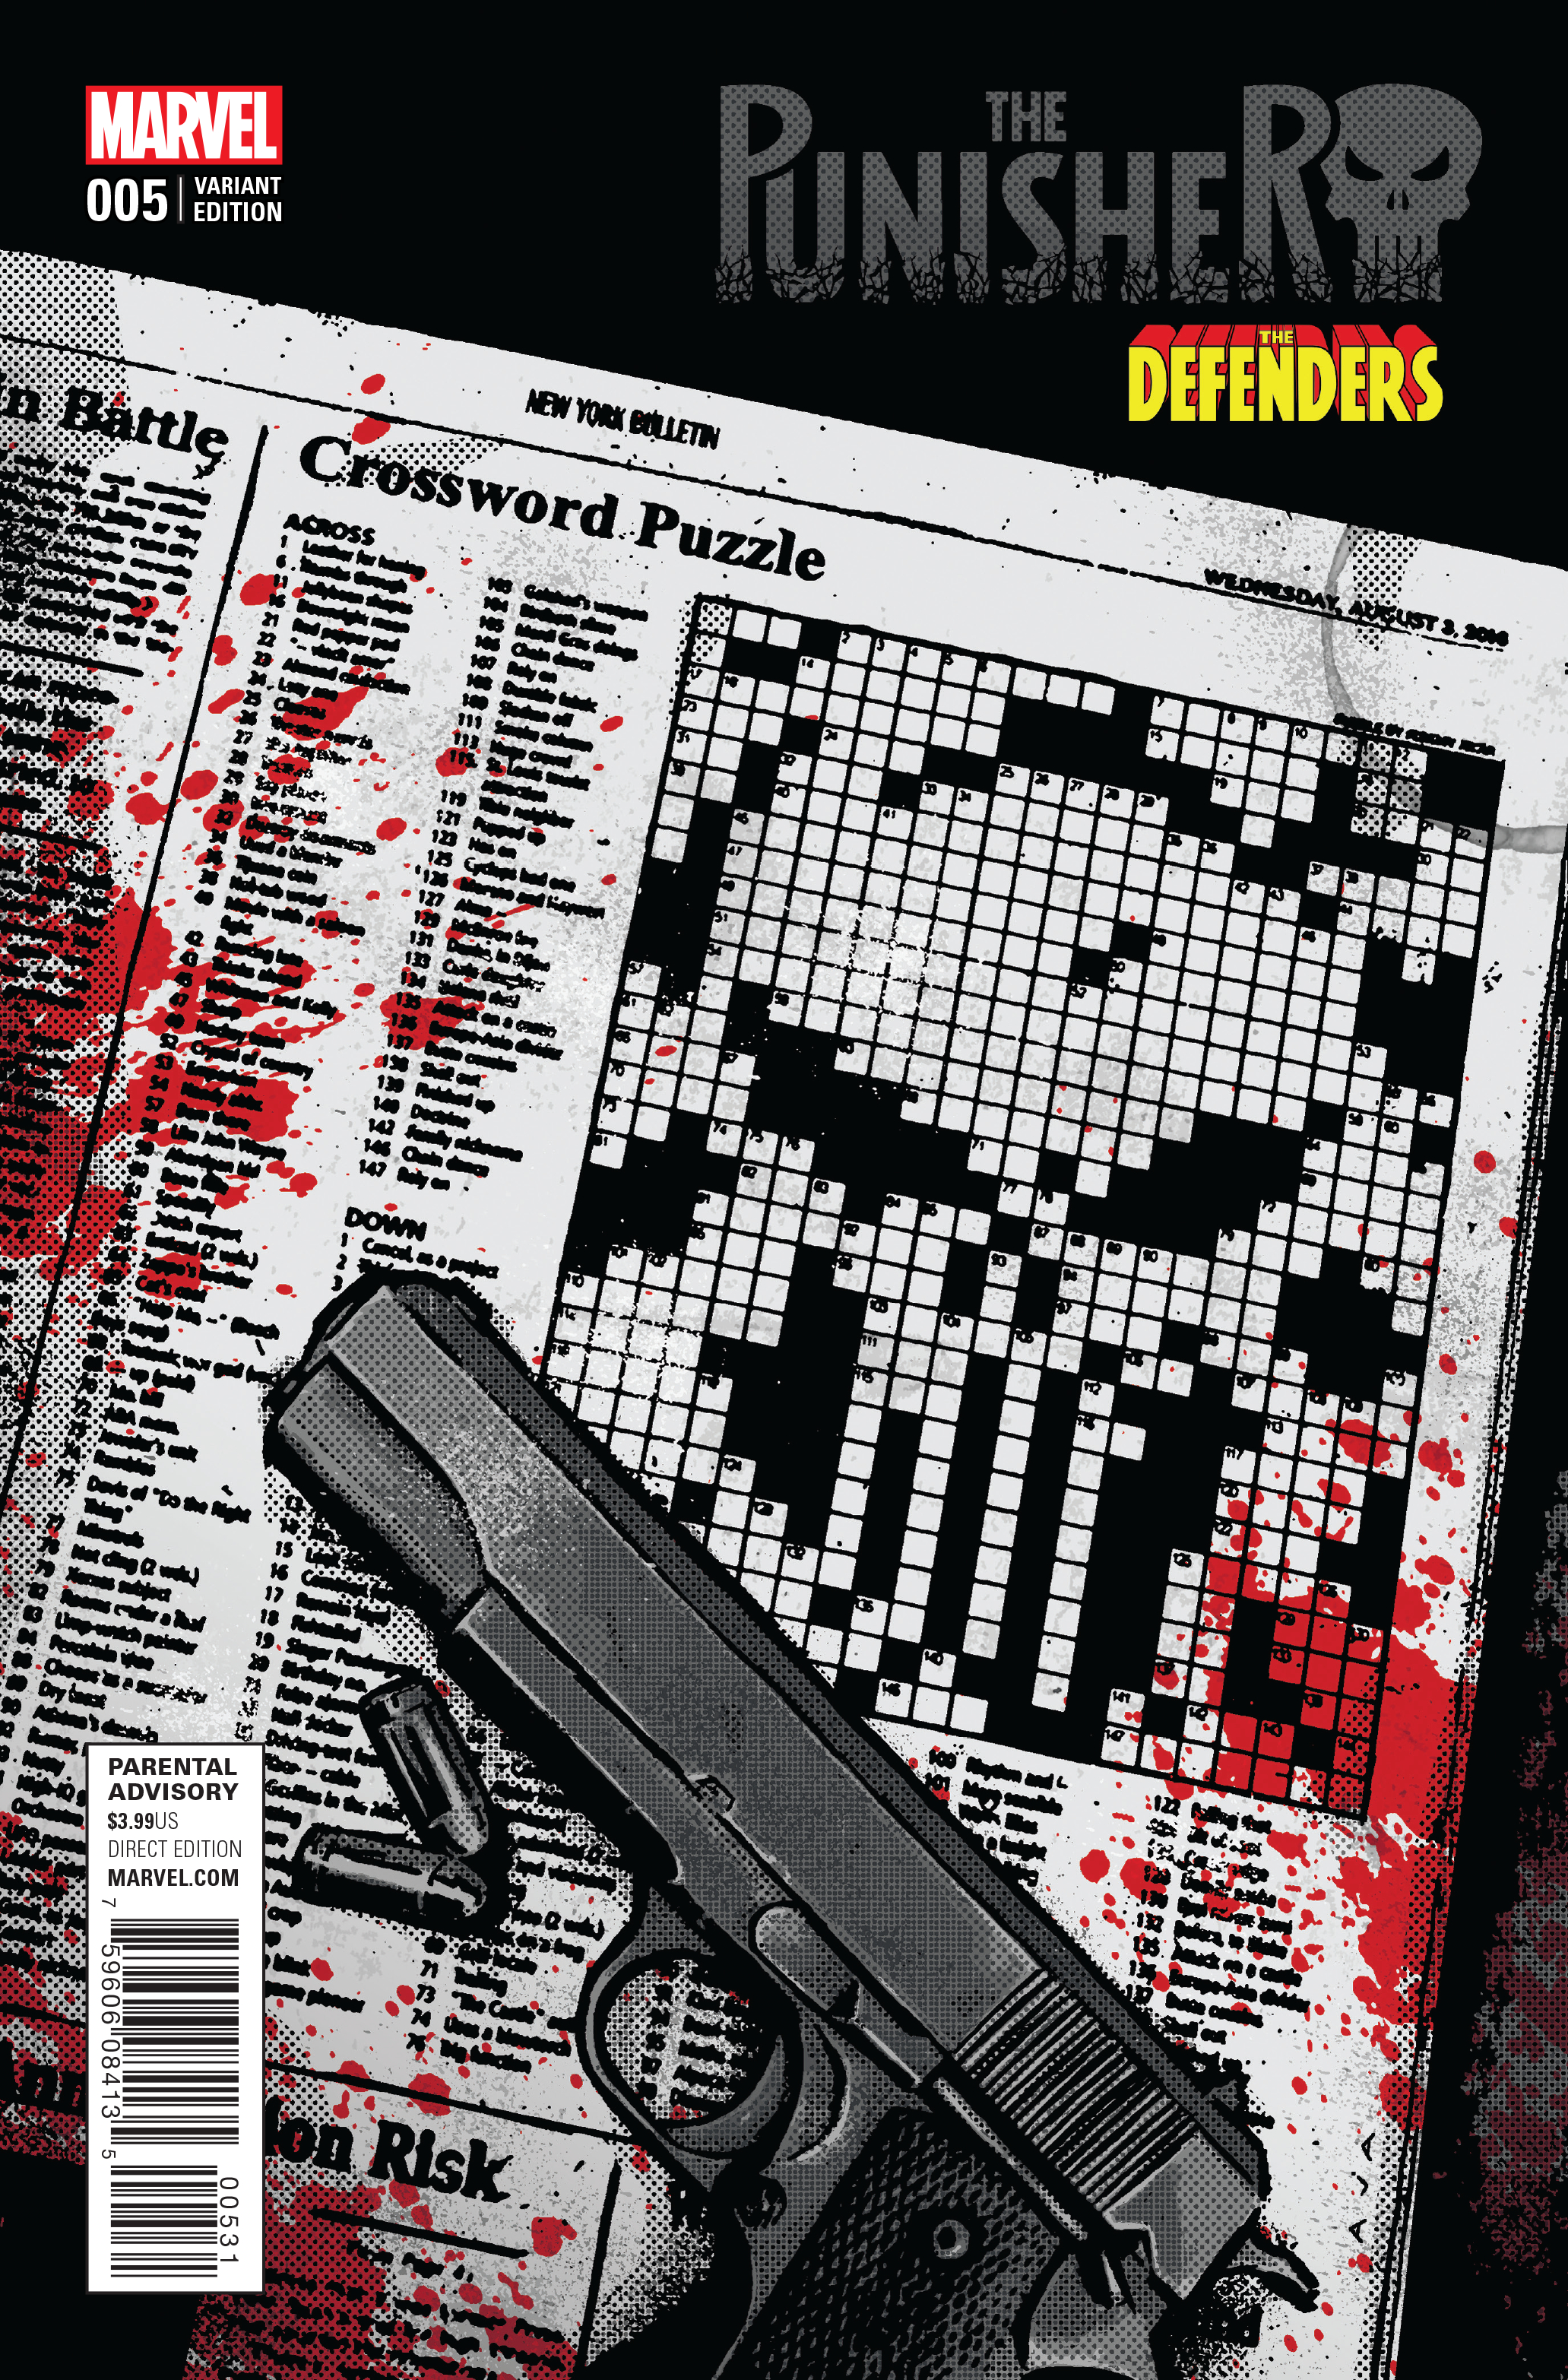 Каратель 5. Punisher 5. Punisher Vol 13 #11 Preview. Defend Word.